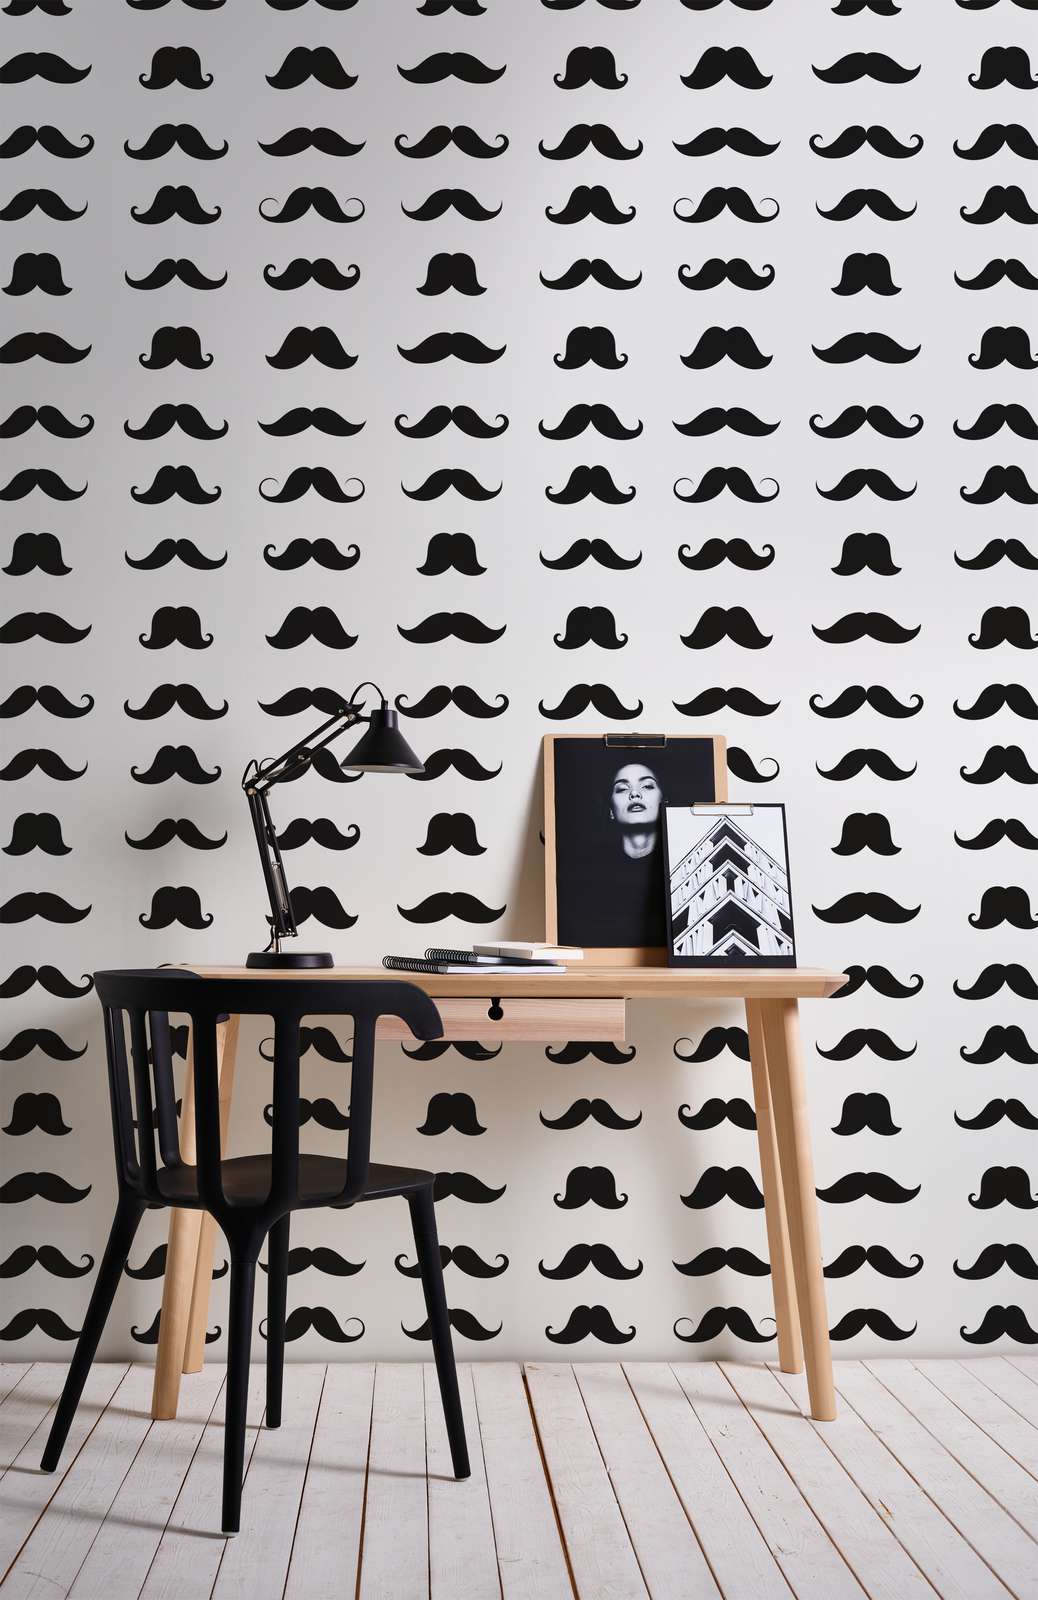             Fotomurali Mustache motivo baffi cool - Bianco e nero - Pile liscio opaco
        